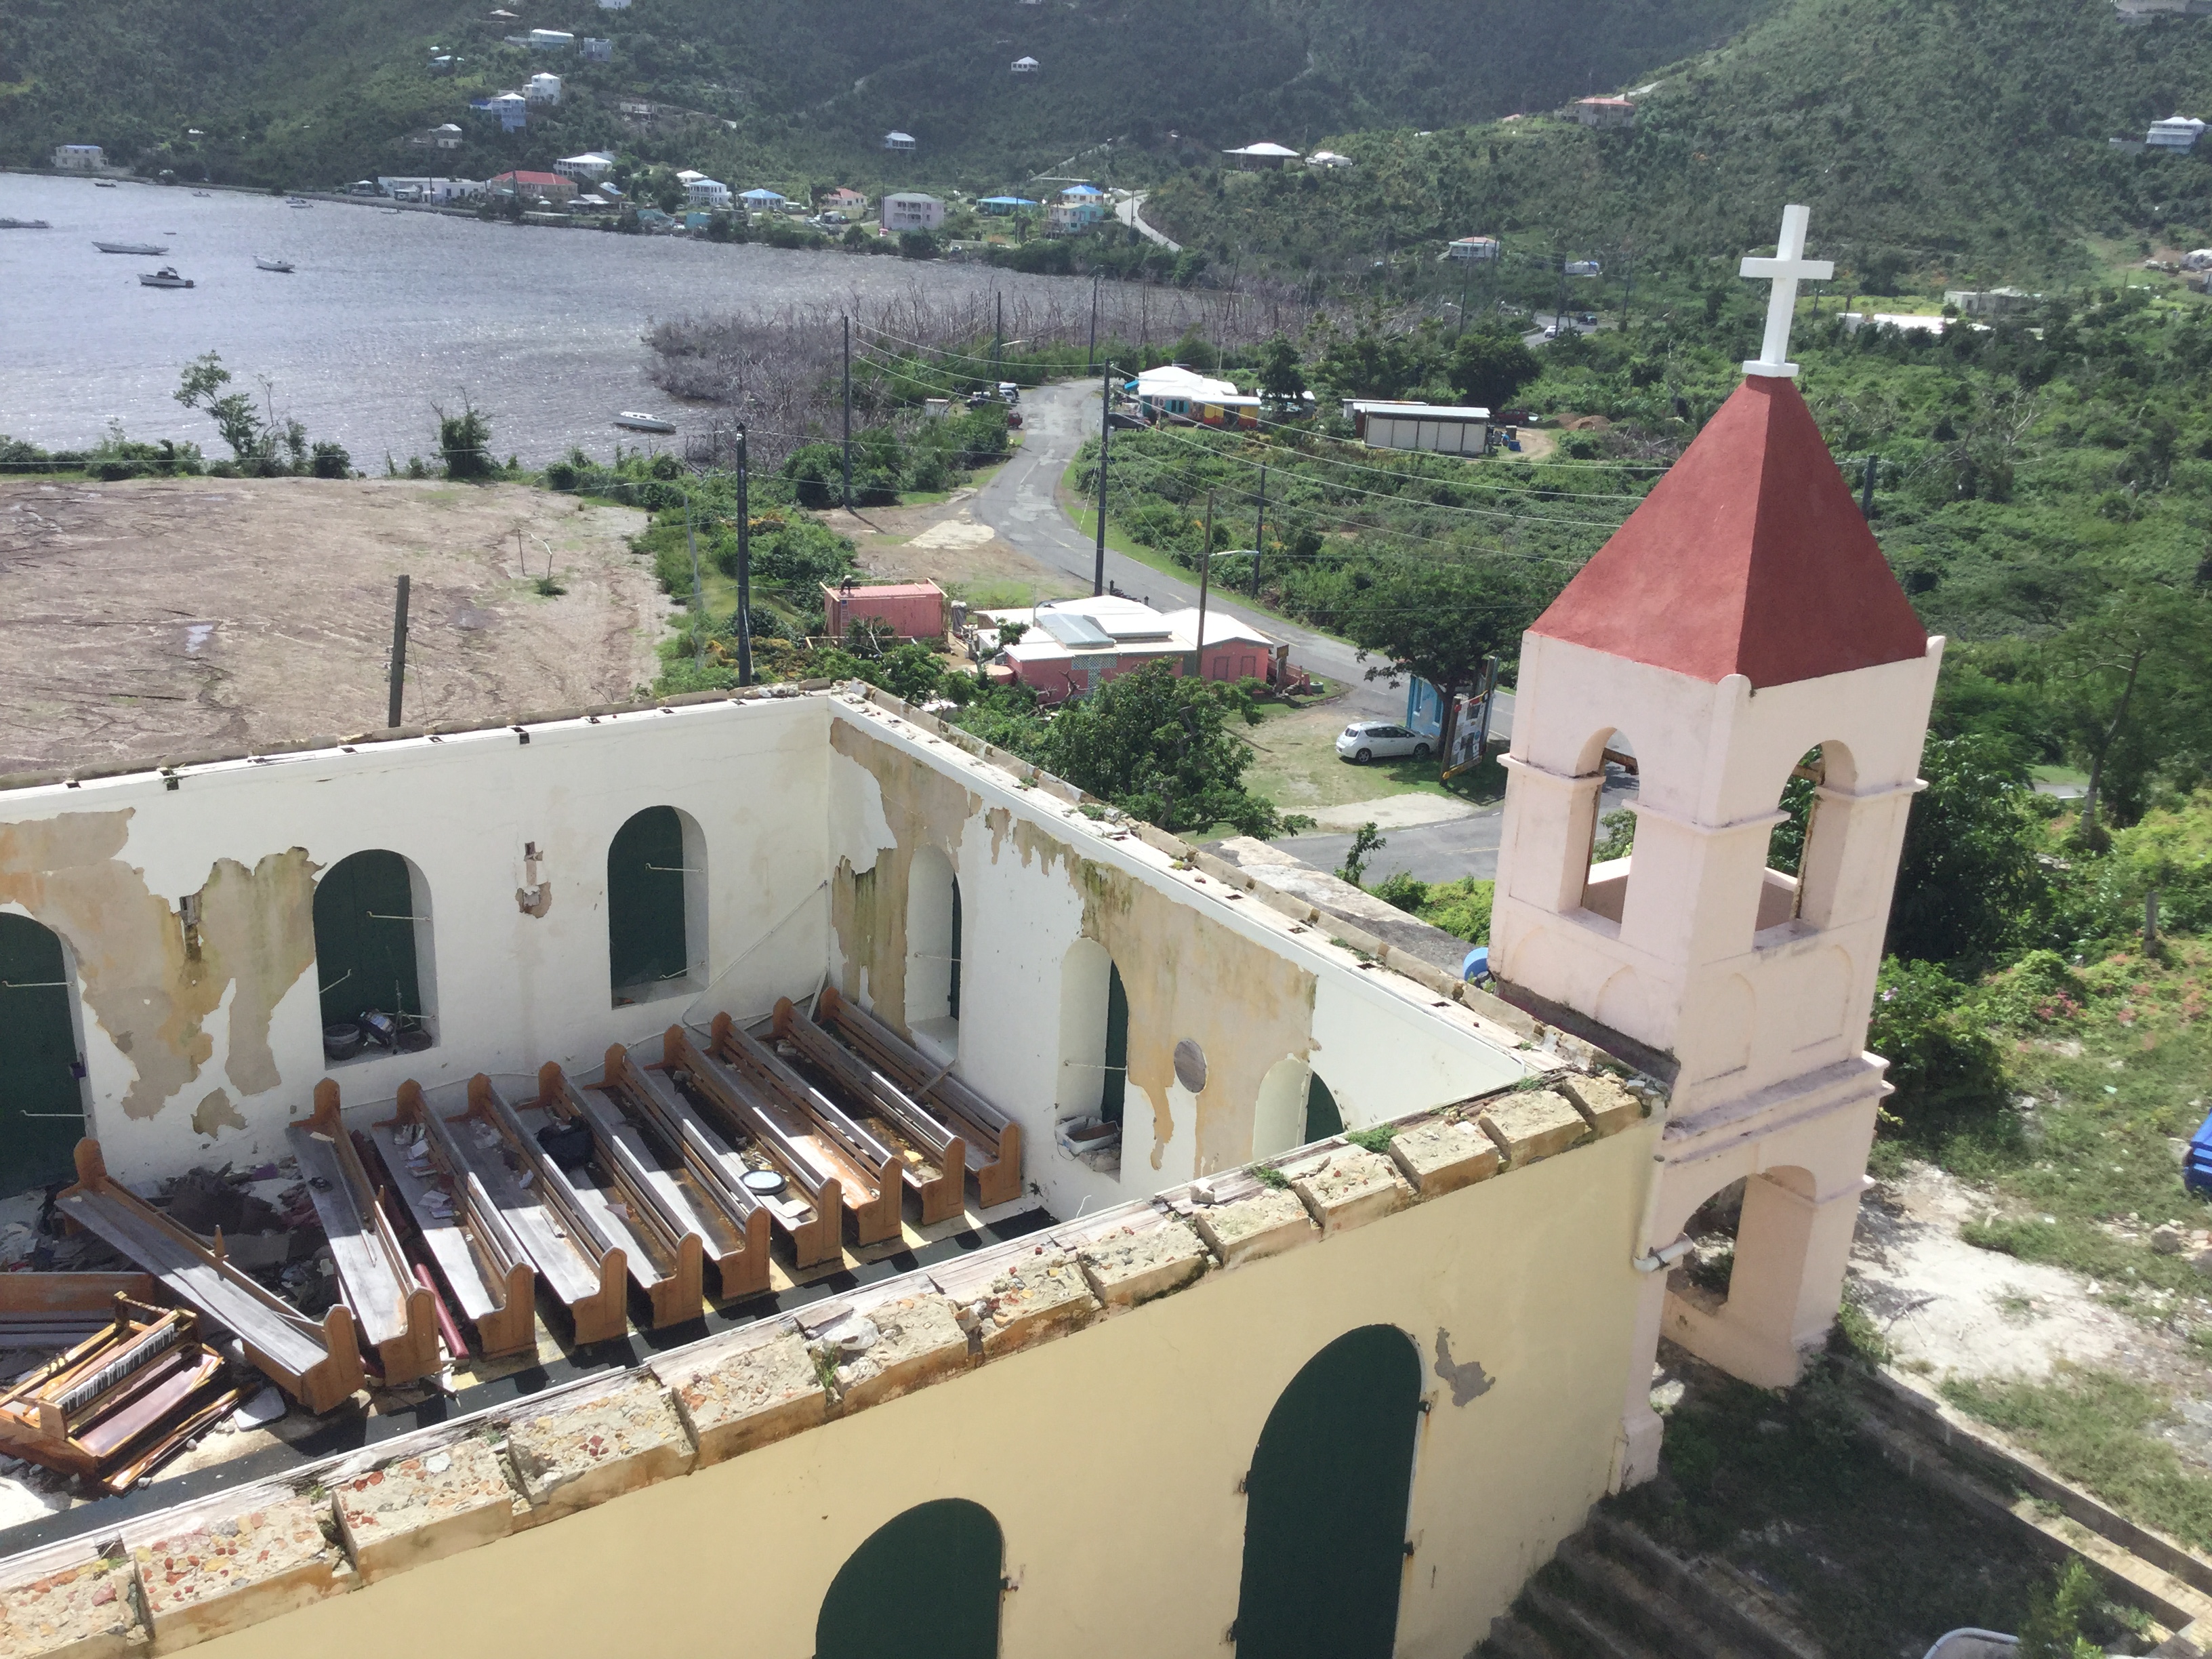 Aerial view inside a church damaged by a hurricane.